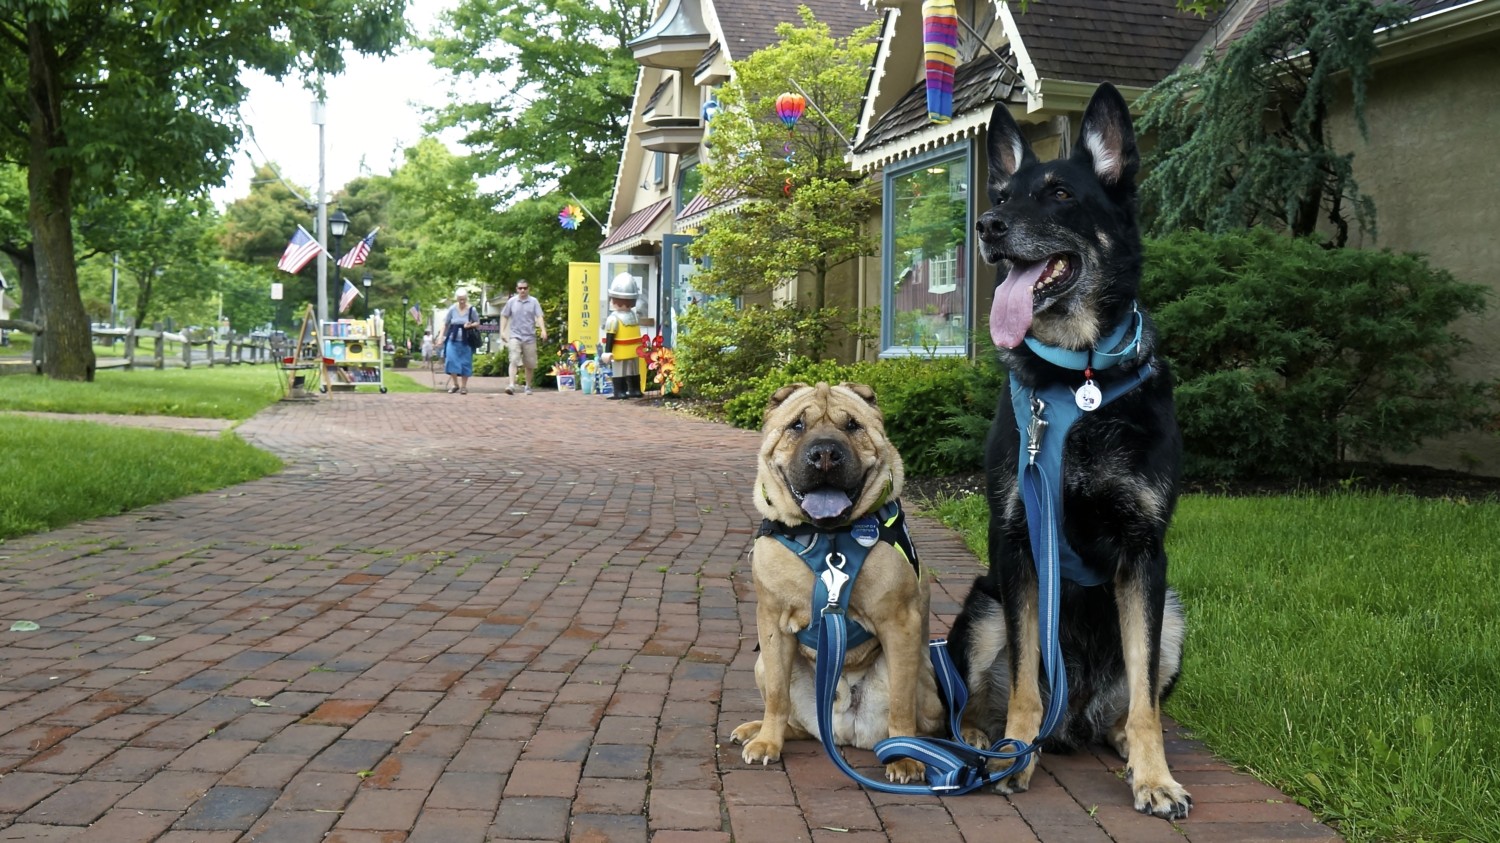 Dog Friendly Peddlers Village in Bucks County, Pennsylvania